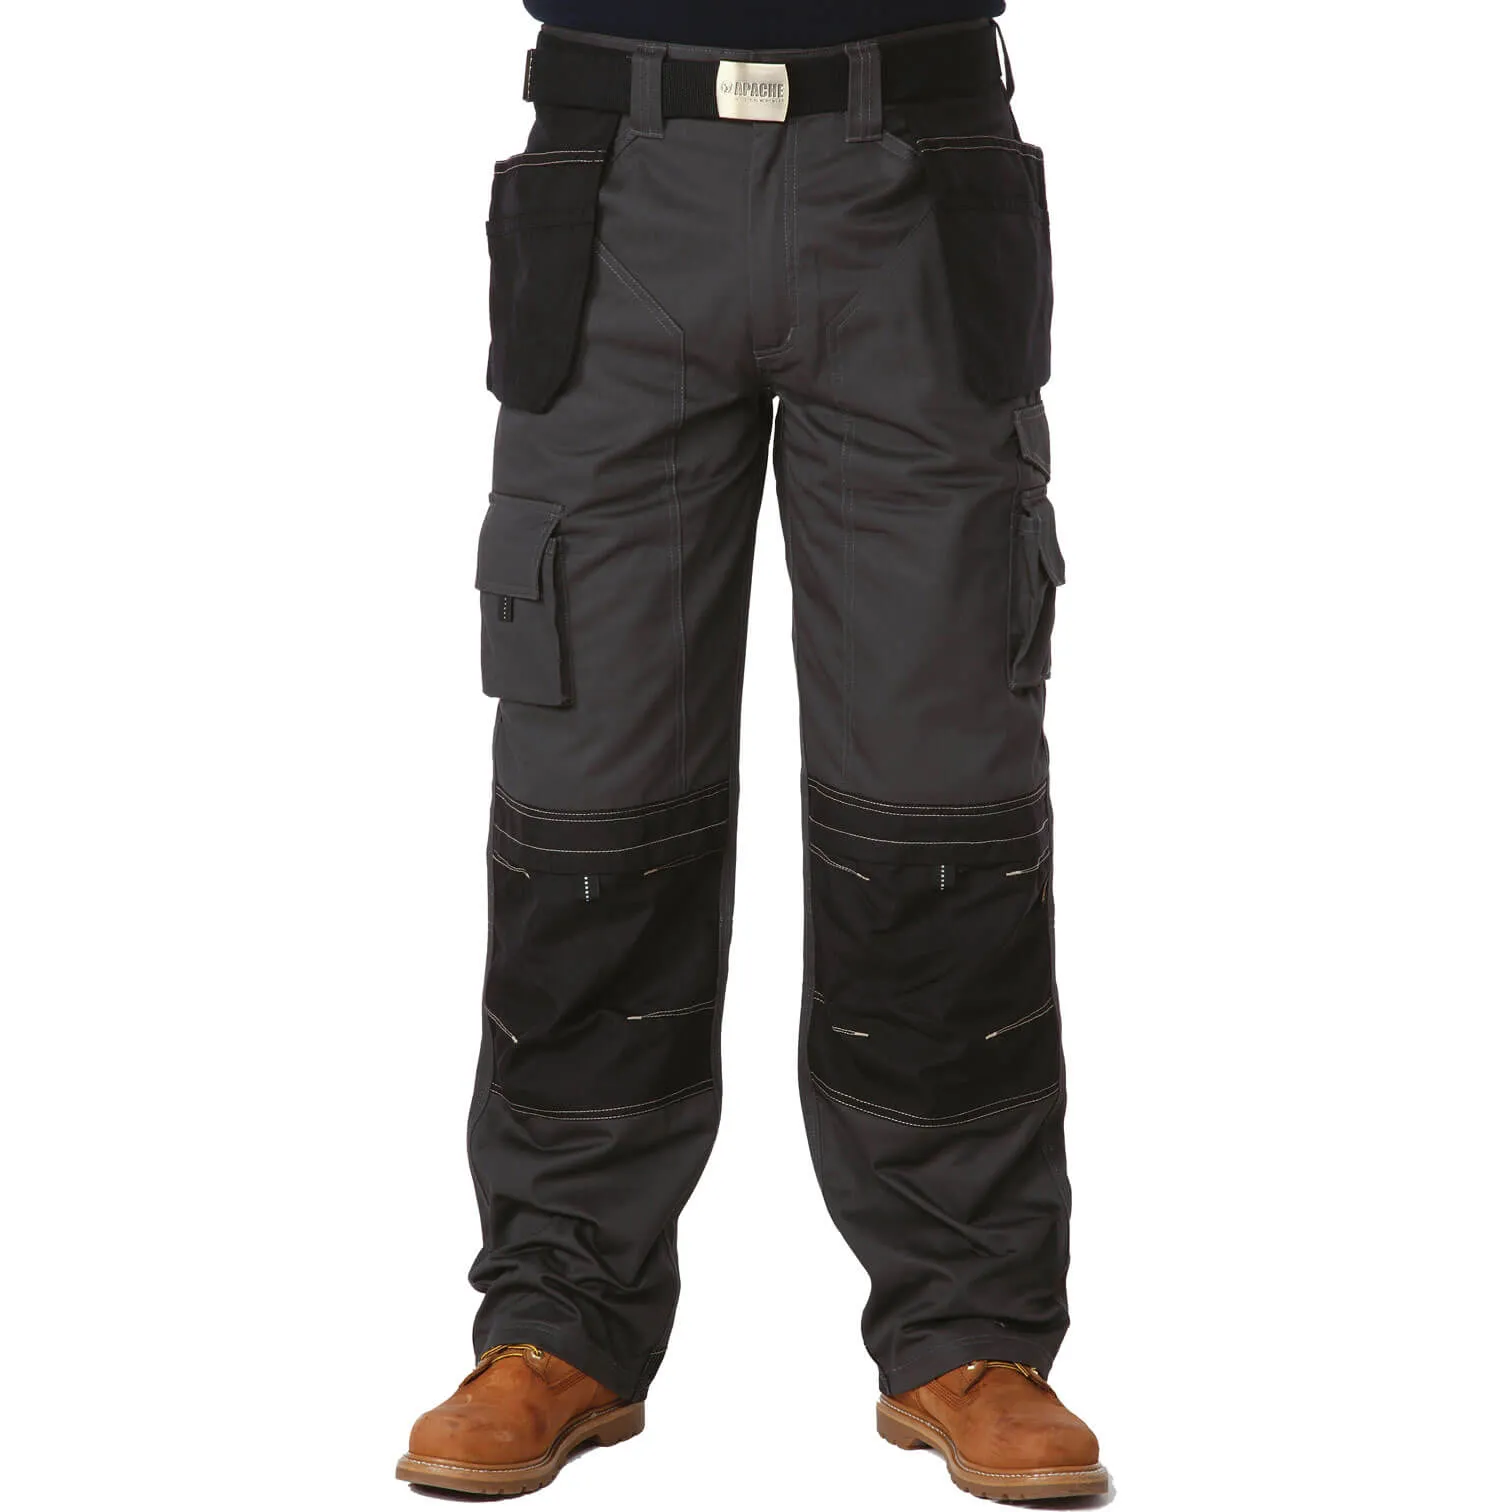 Apache Mens Holster Pocket Trousers - Black / Grey, 30", 31"